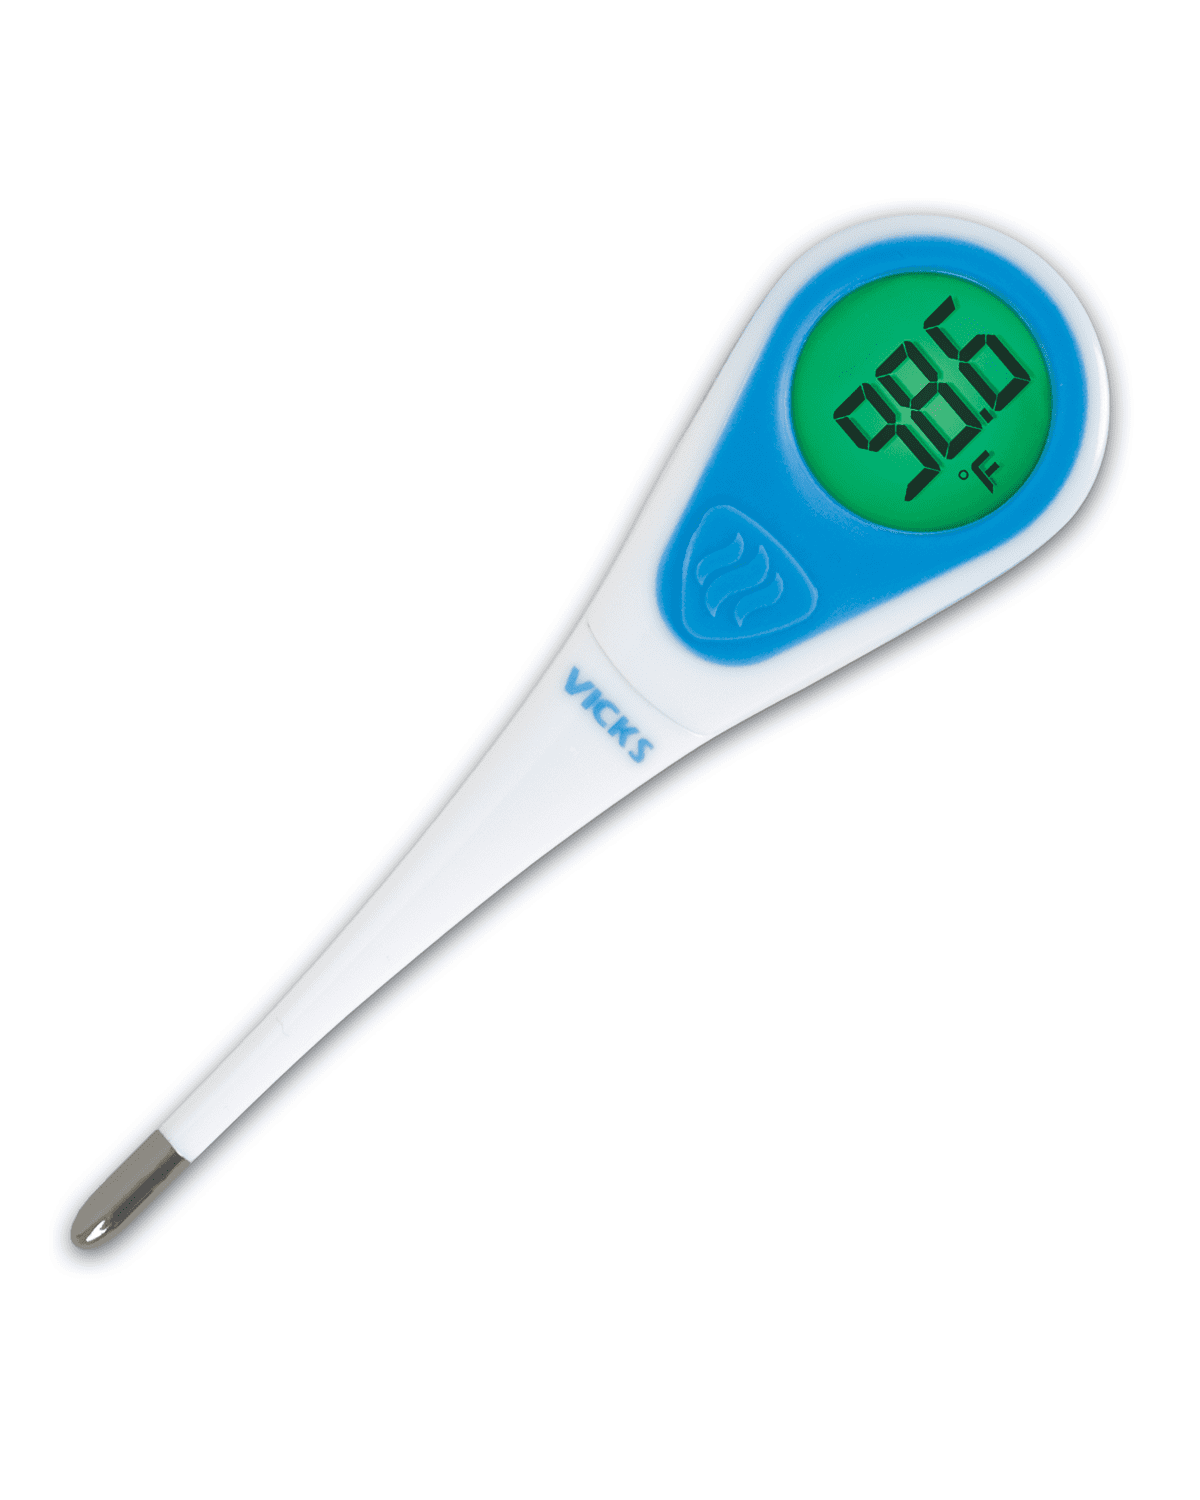 Image result for vicks digital thermometer